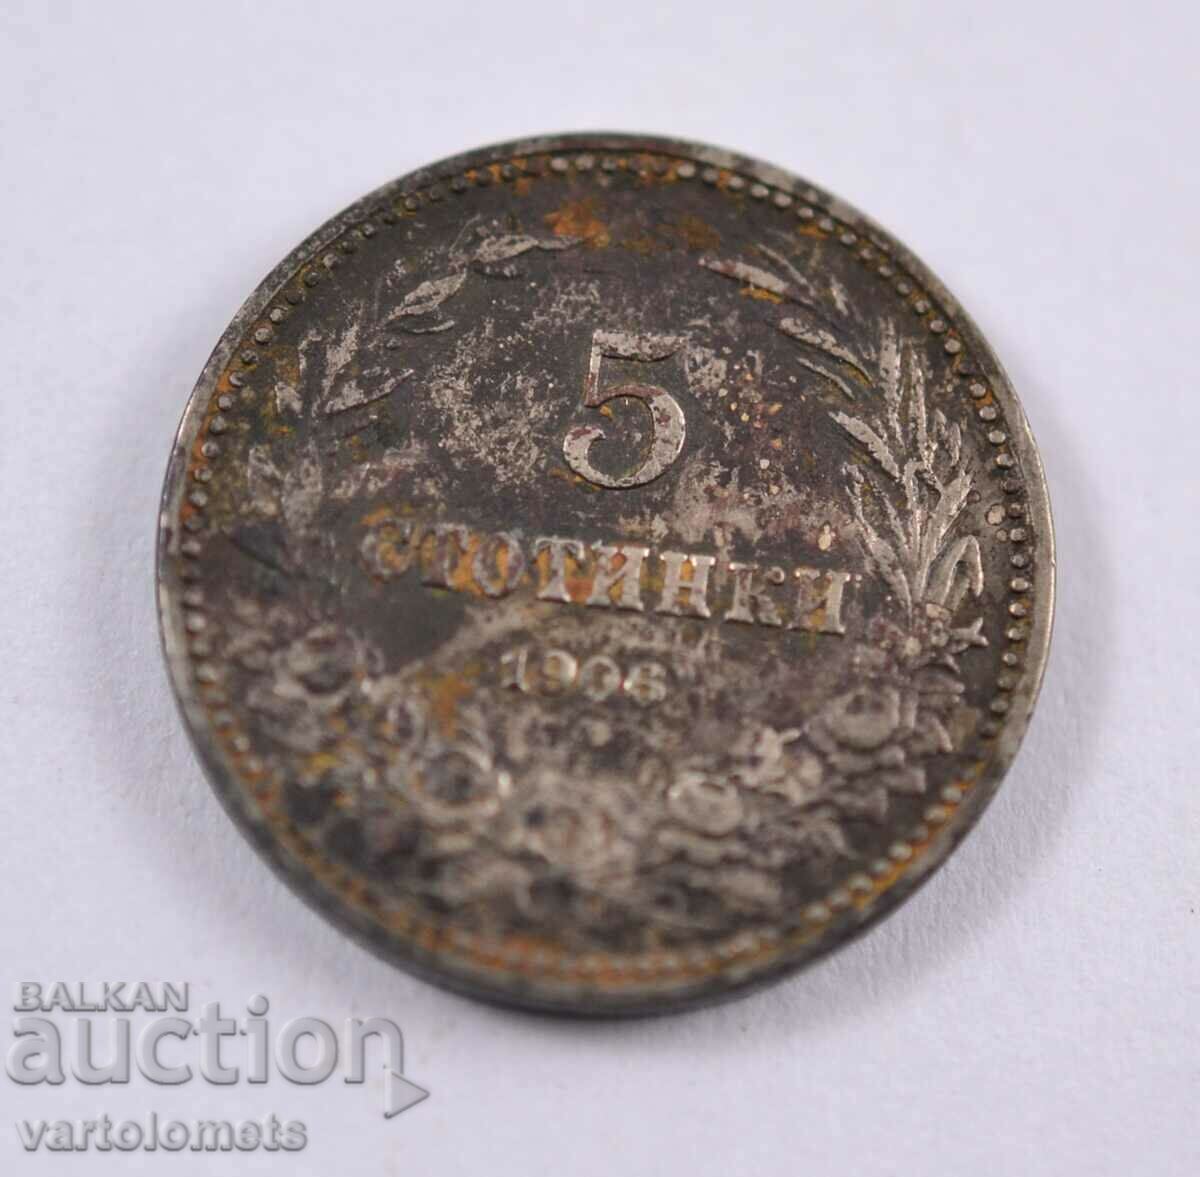 5 cents 1906 - Bulgaria